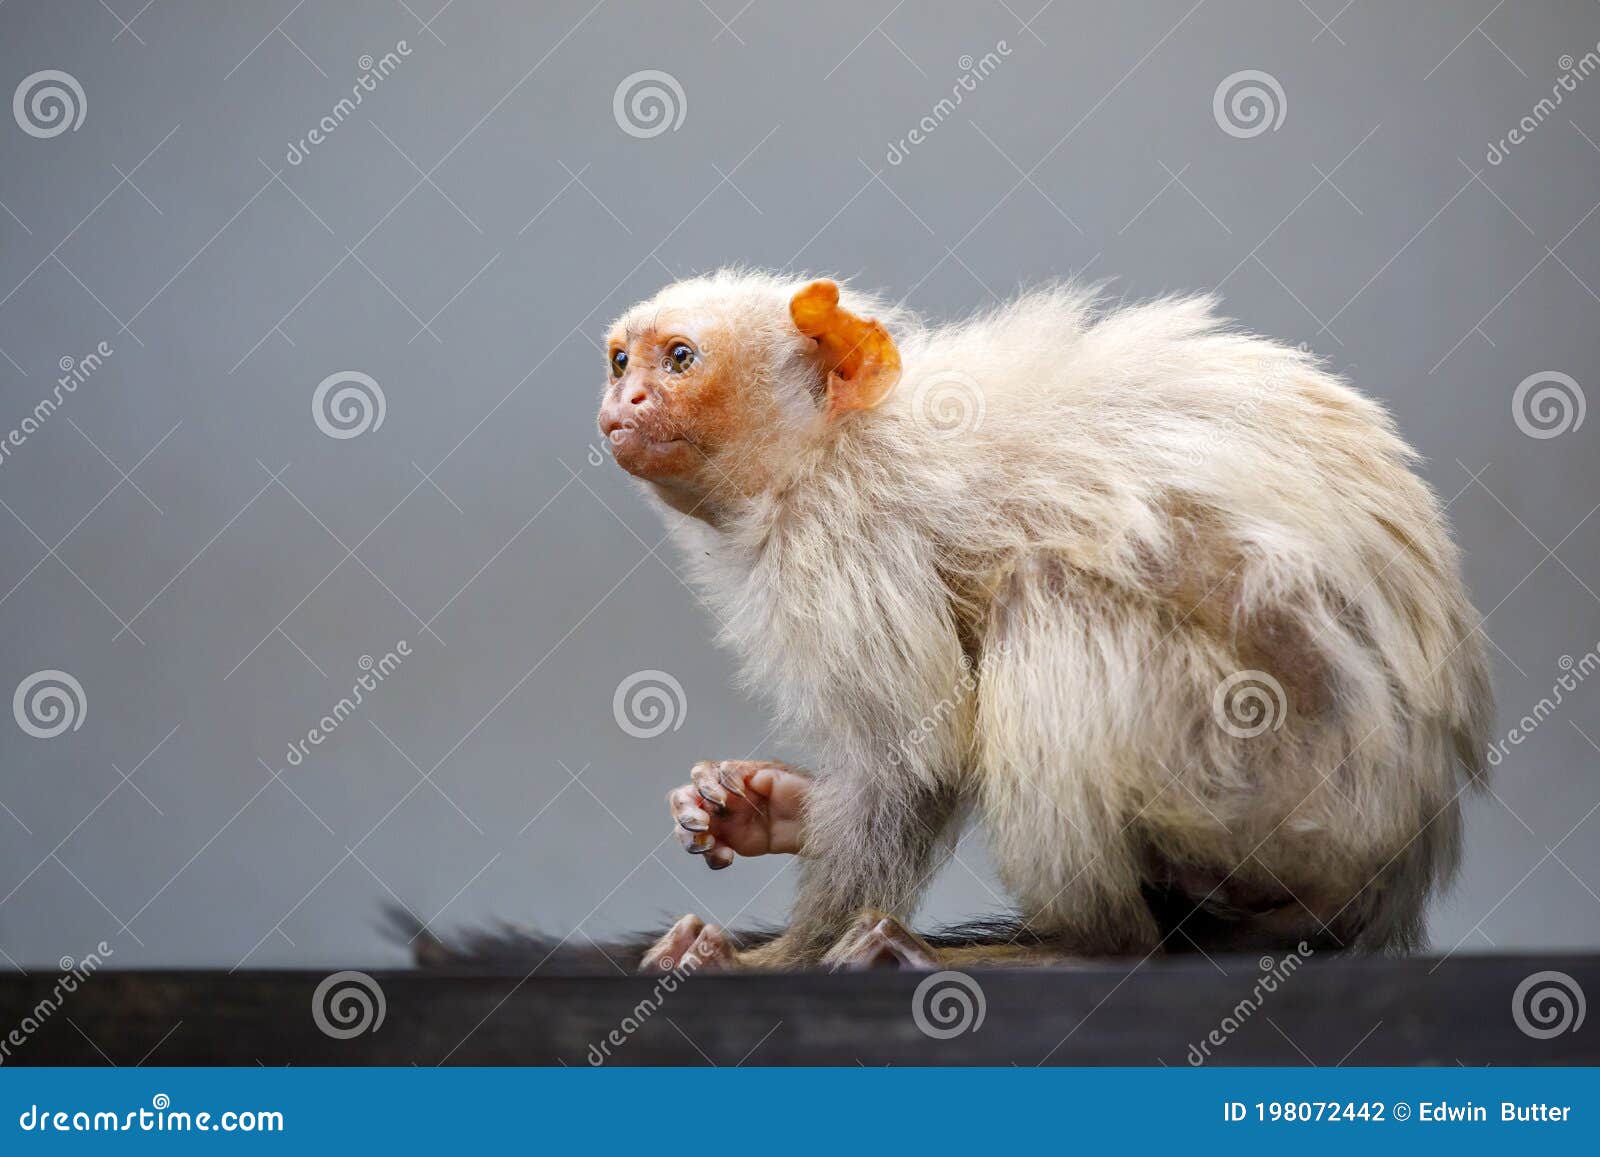 portrait of a silvery marmoset mico argentatus